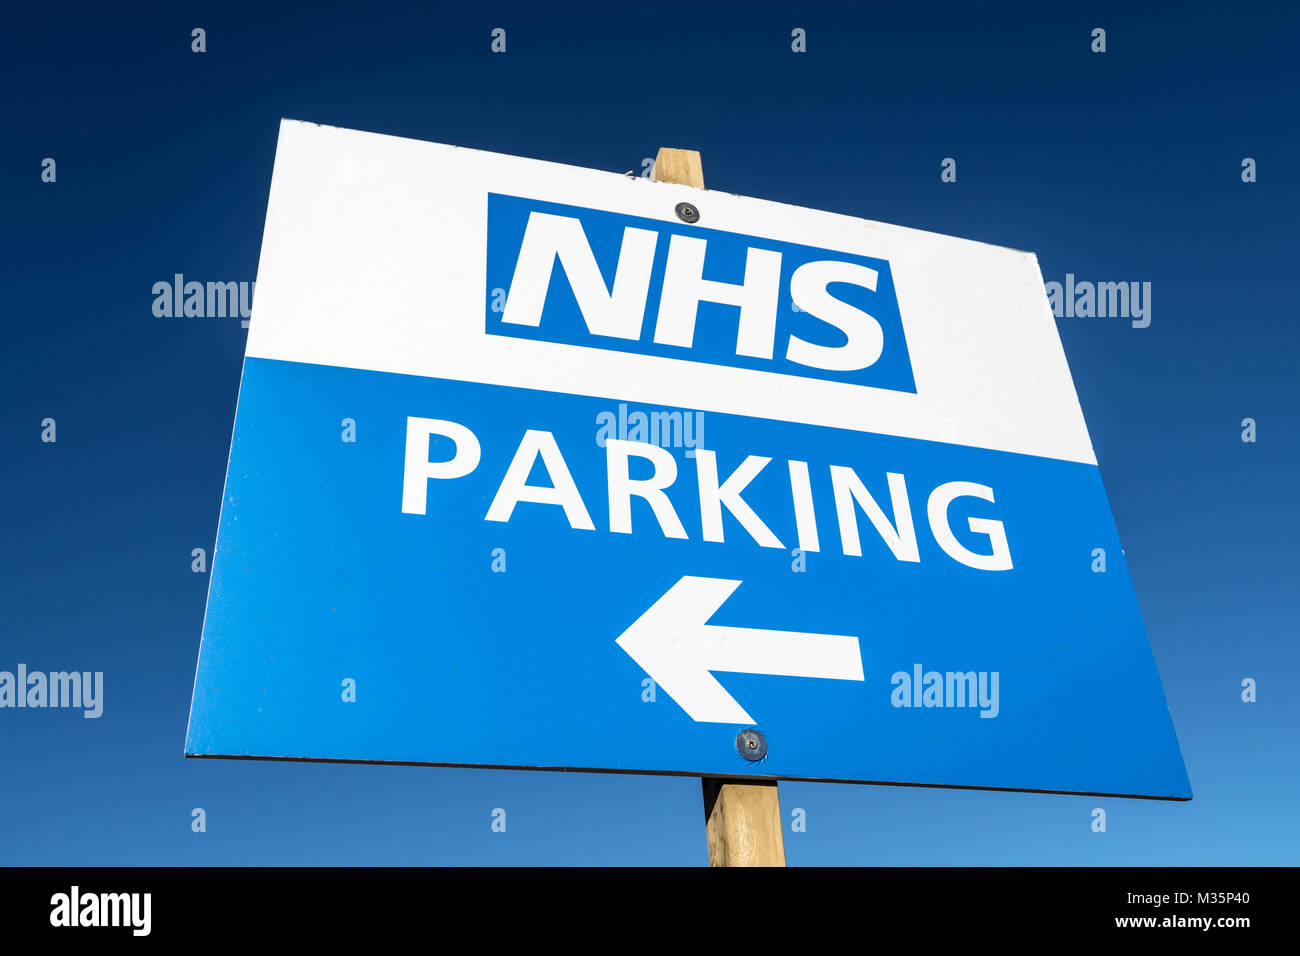 NHS car parking sign Stock Photo